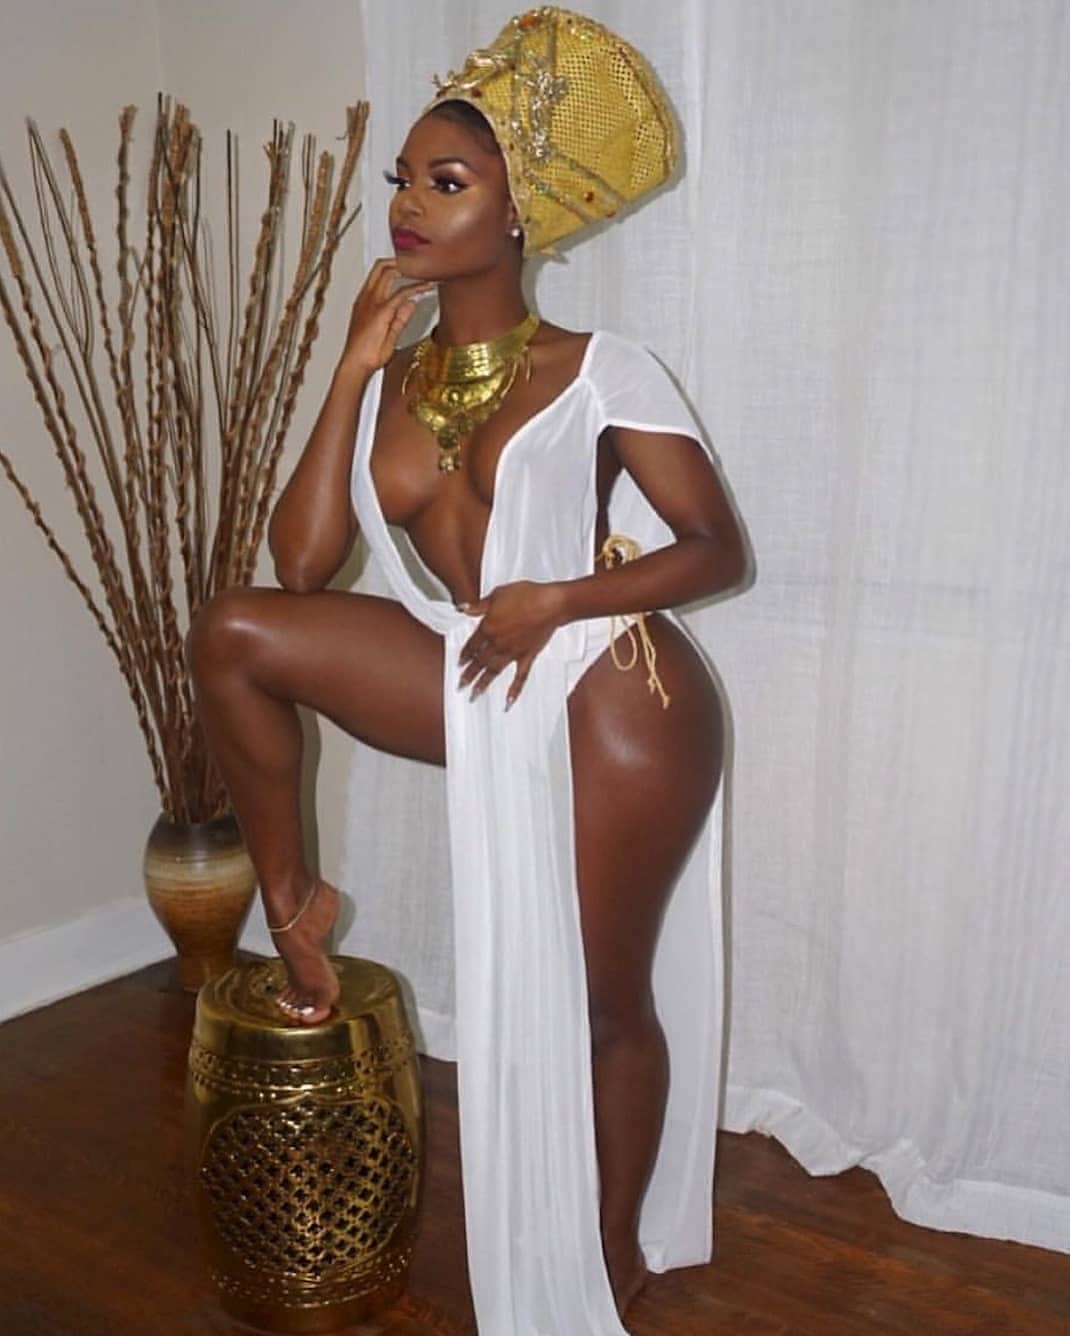 Curvy Afro Instagram Model Photoshoot: Hot Black Girls,  Hot Instagram Teens,  Hot Insta Pics,  Hot Insta Girls,  Hot Bikini Pics,  Black Girls Bikini Pics,  Black Girls Instapics  